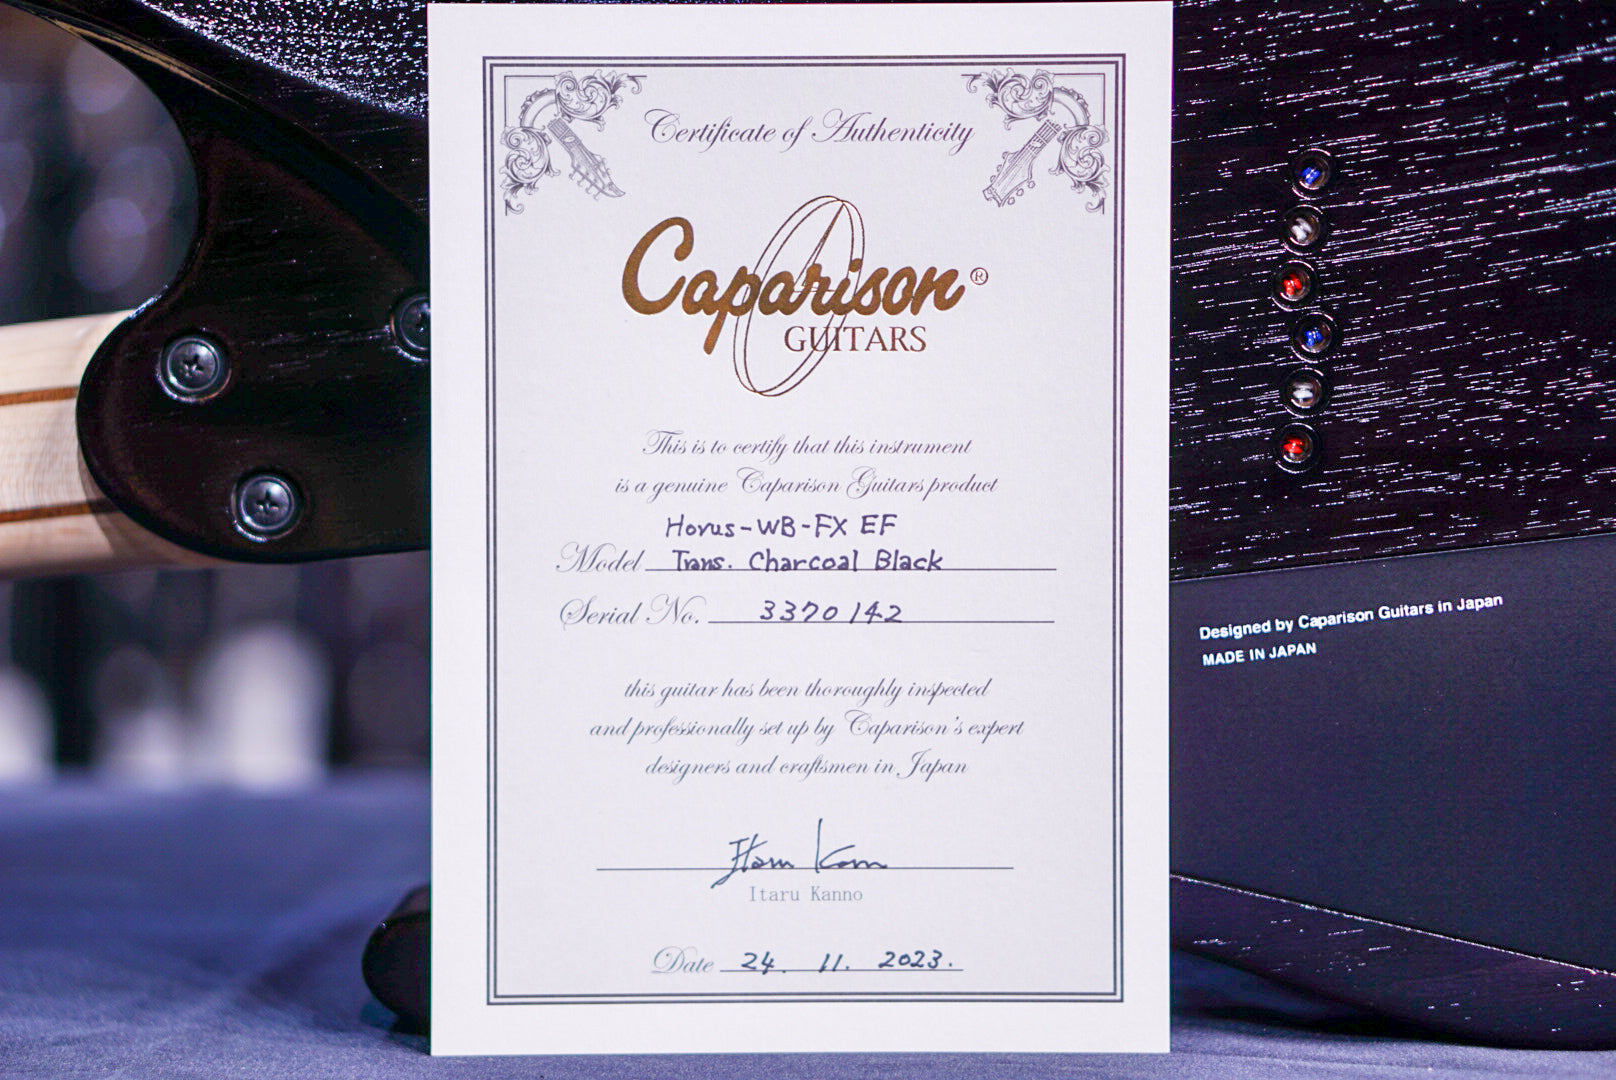 Caparison Horus WB FX EF Trans charcoal black 3370142 - HIENDGUITAR   Caparison Guitars